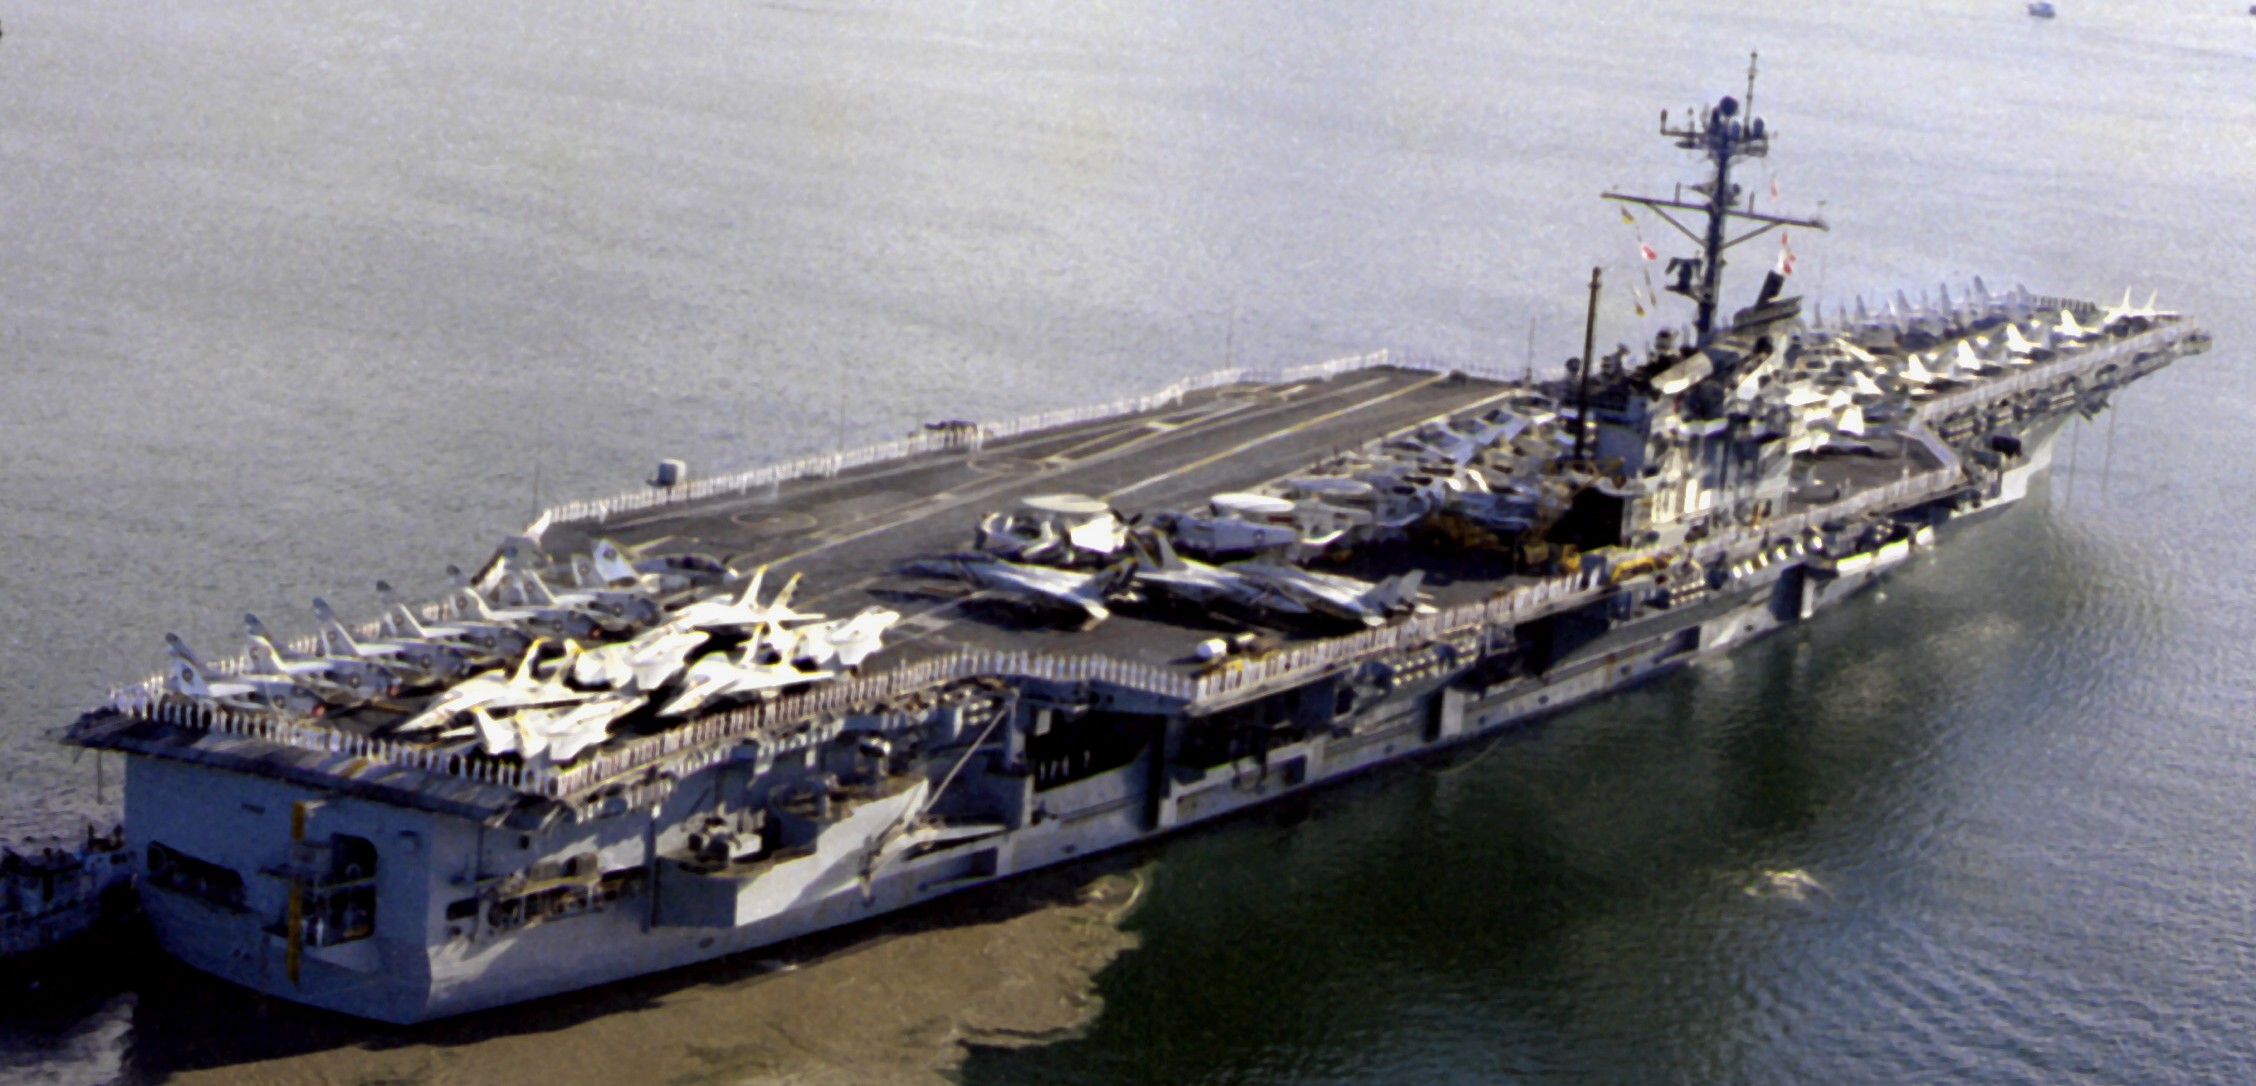 cv-61 uss ranger forrestal class aircraft carrier air wing cvw-2 us navy pearl harbor 1982 44